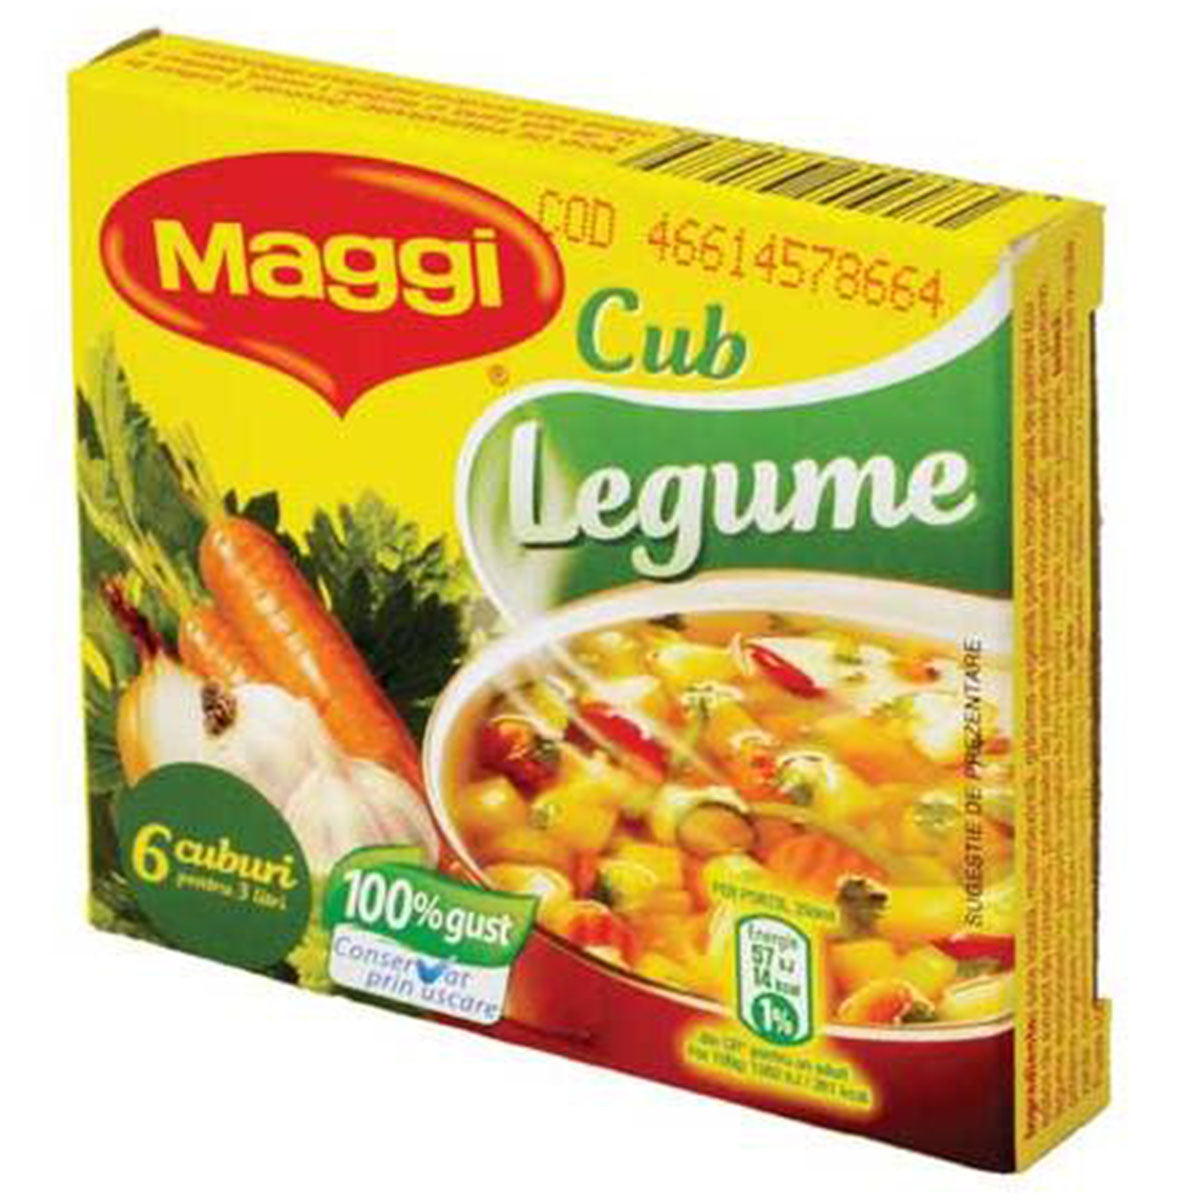 Maggi - Cube Legume - 60g - Continental Food Store